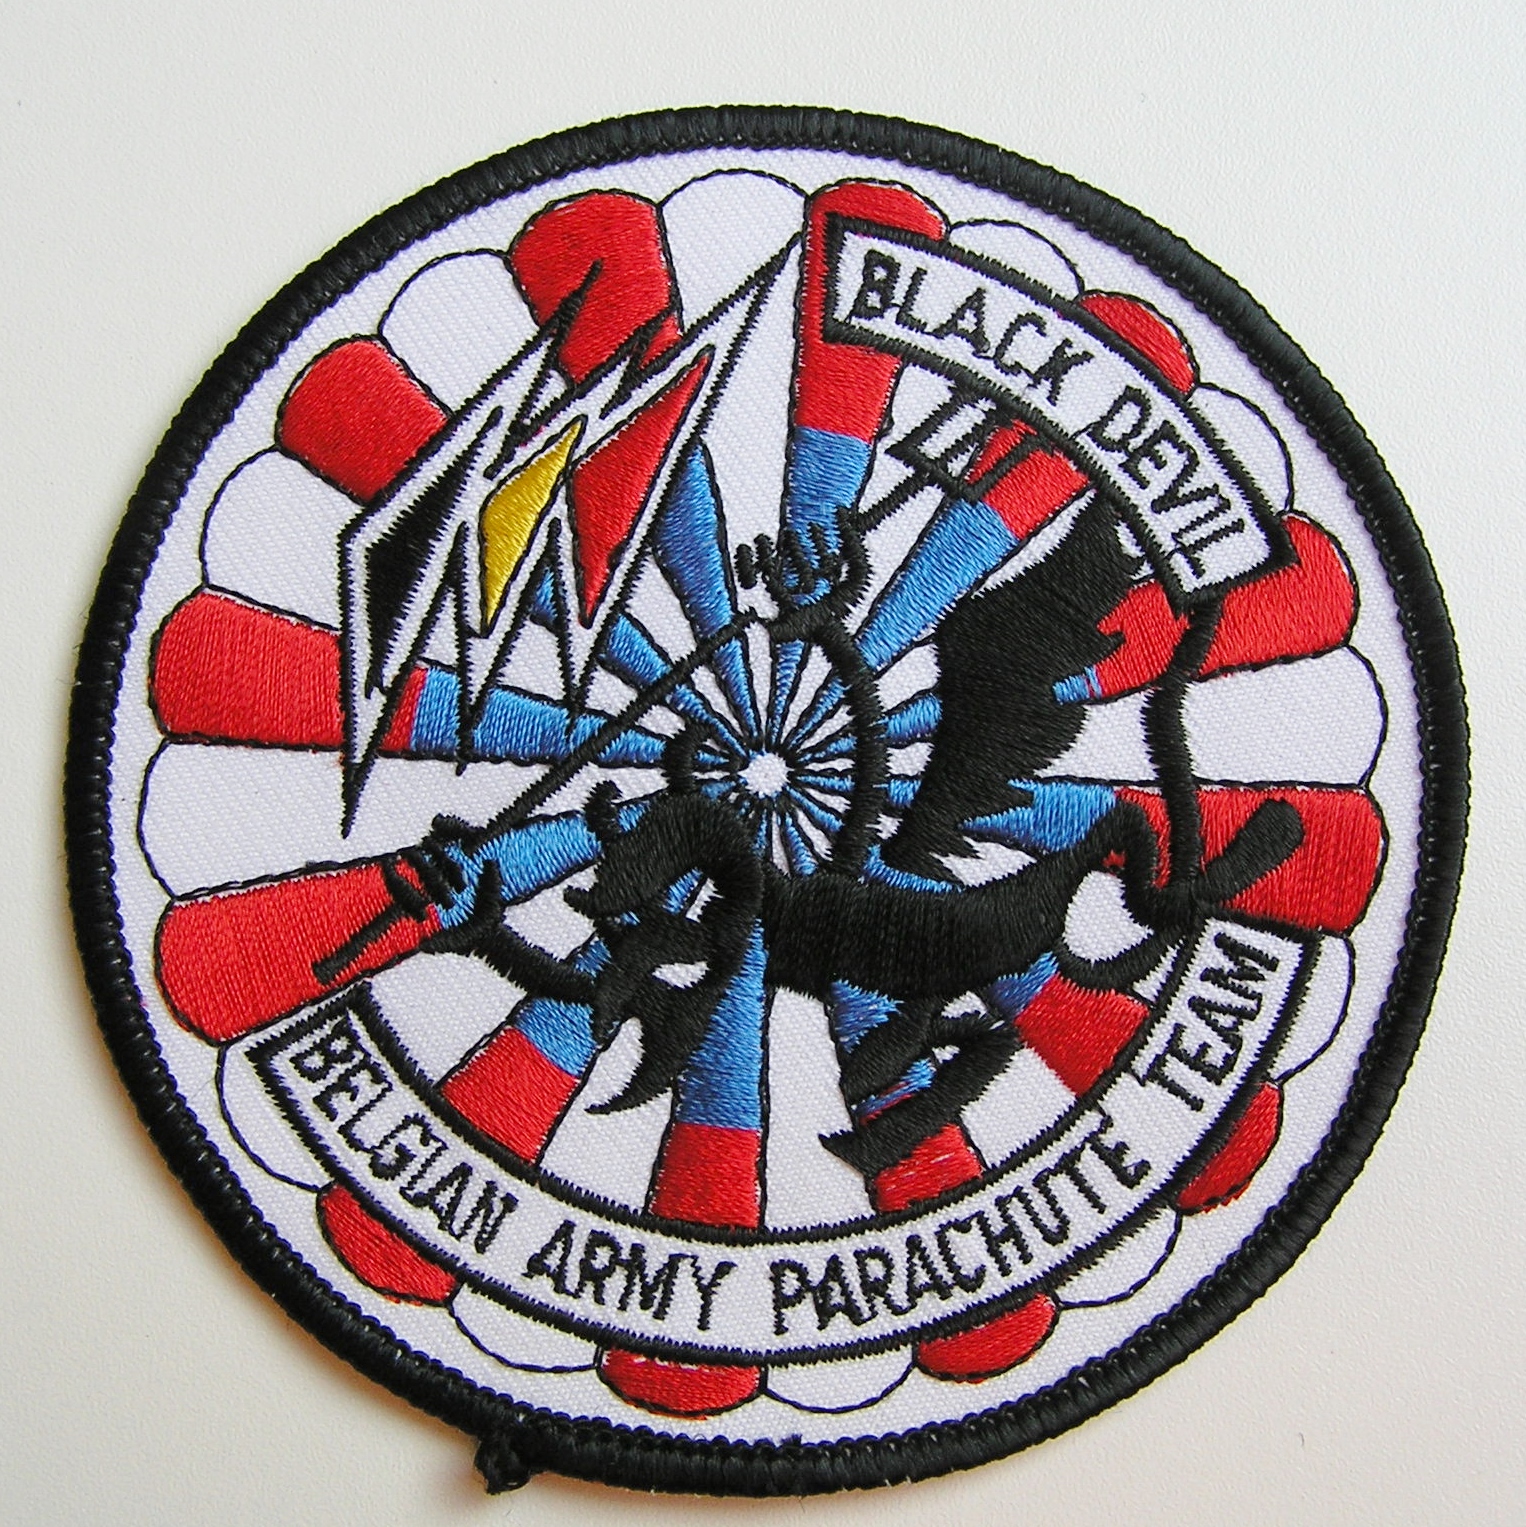 Belgium Para Belgian Army Black Devils Parachute Team Badge Patch Insignia I